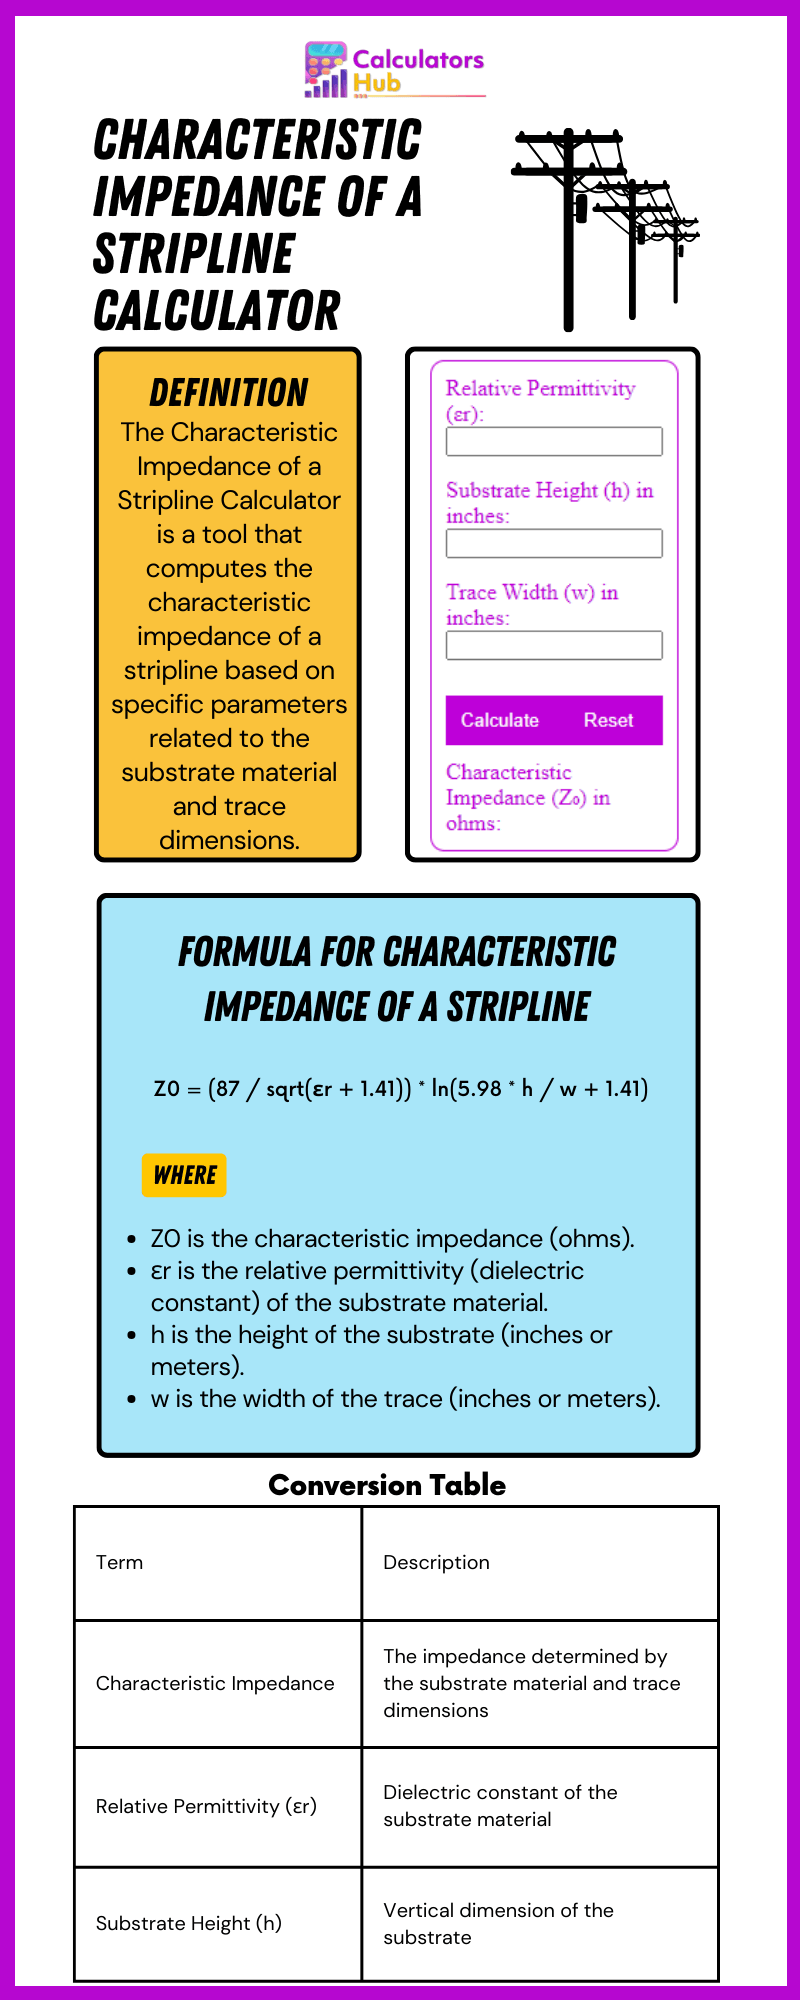 Characteristic Impedance of a Stripline Calculator